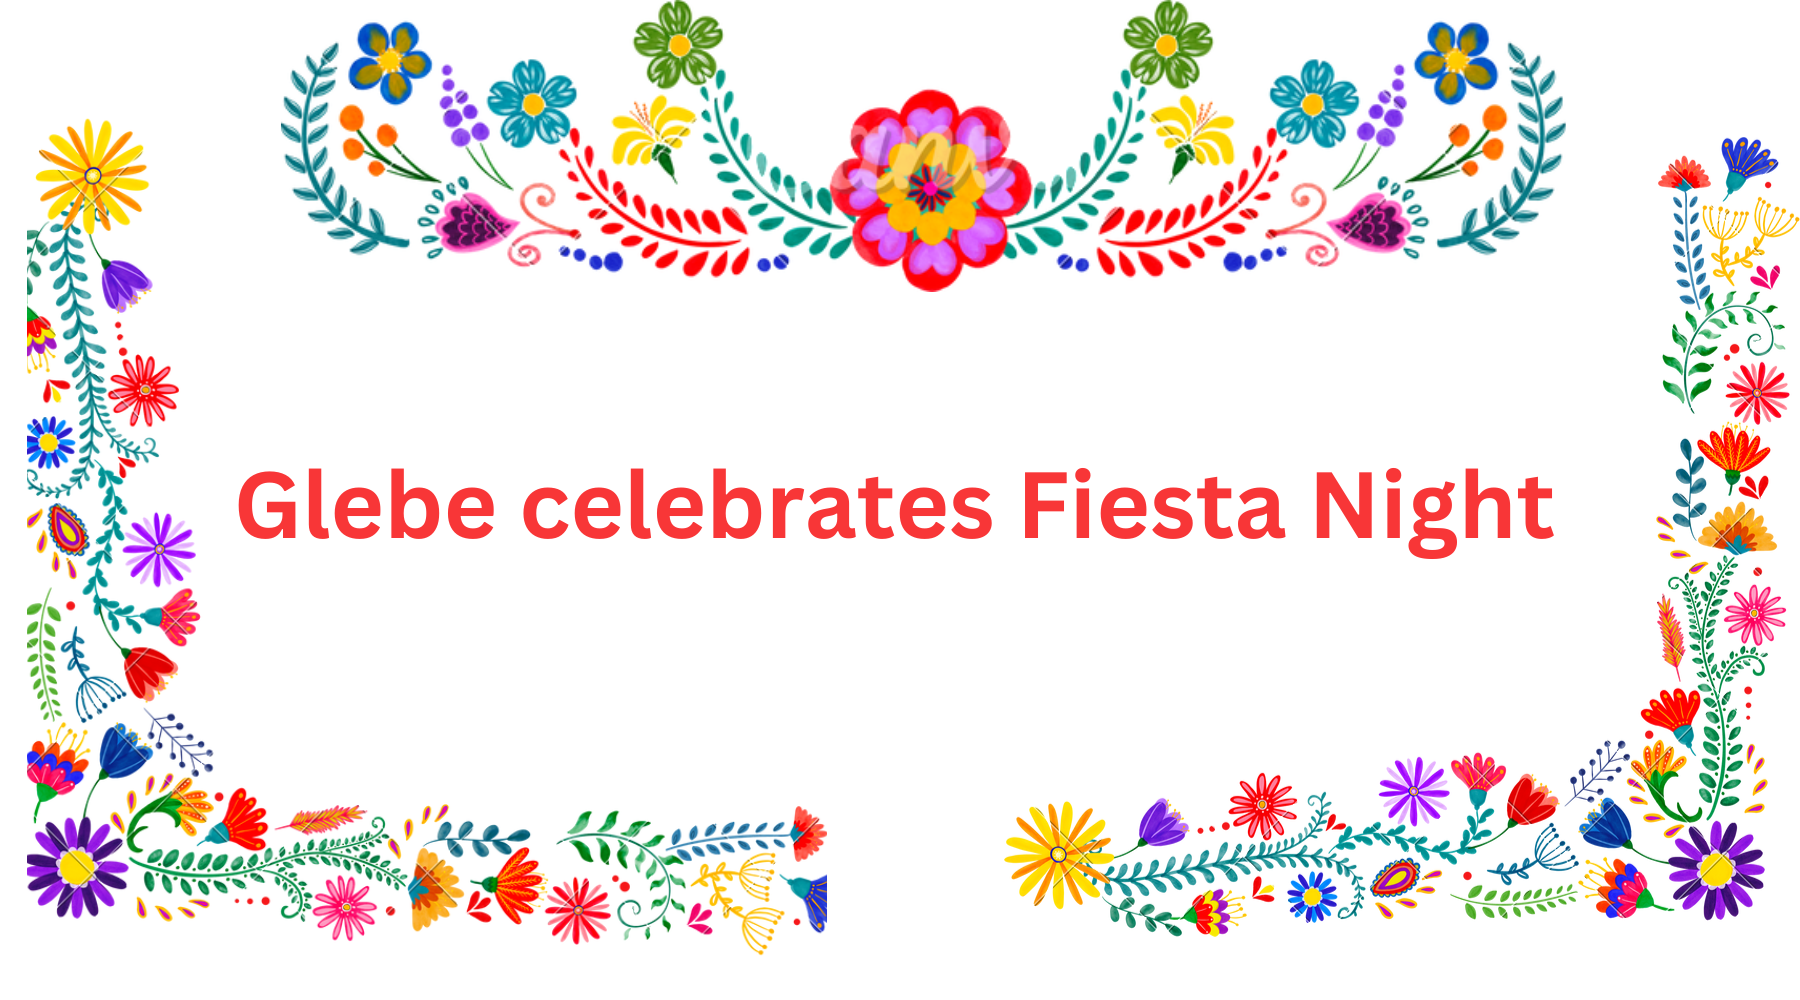 Glebe celebrates Fiesta Night